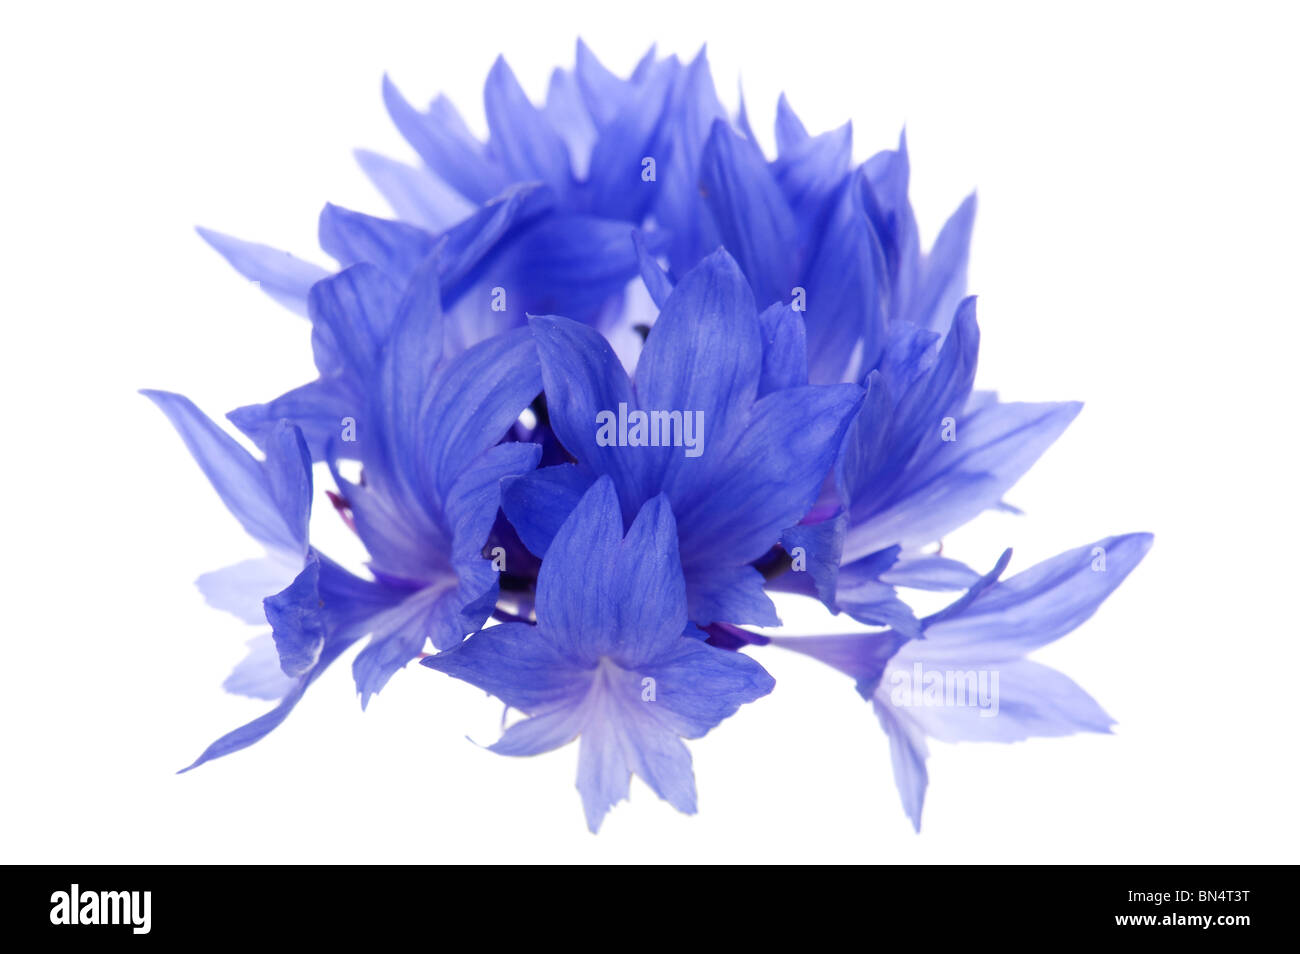 object on white - flowers blue cornflower close up Stock Photo